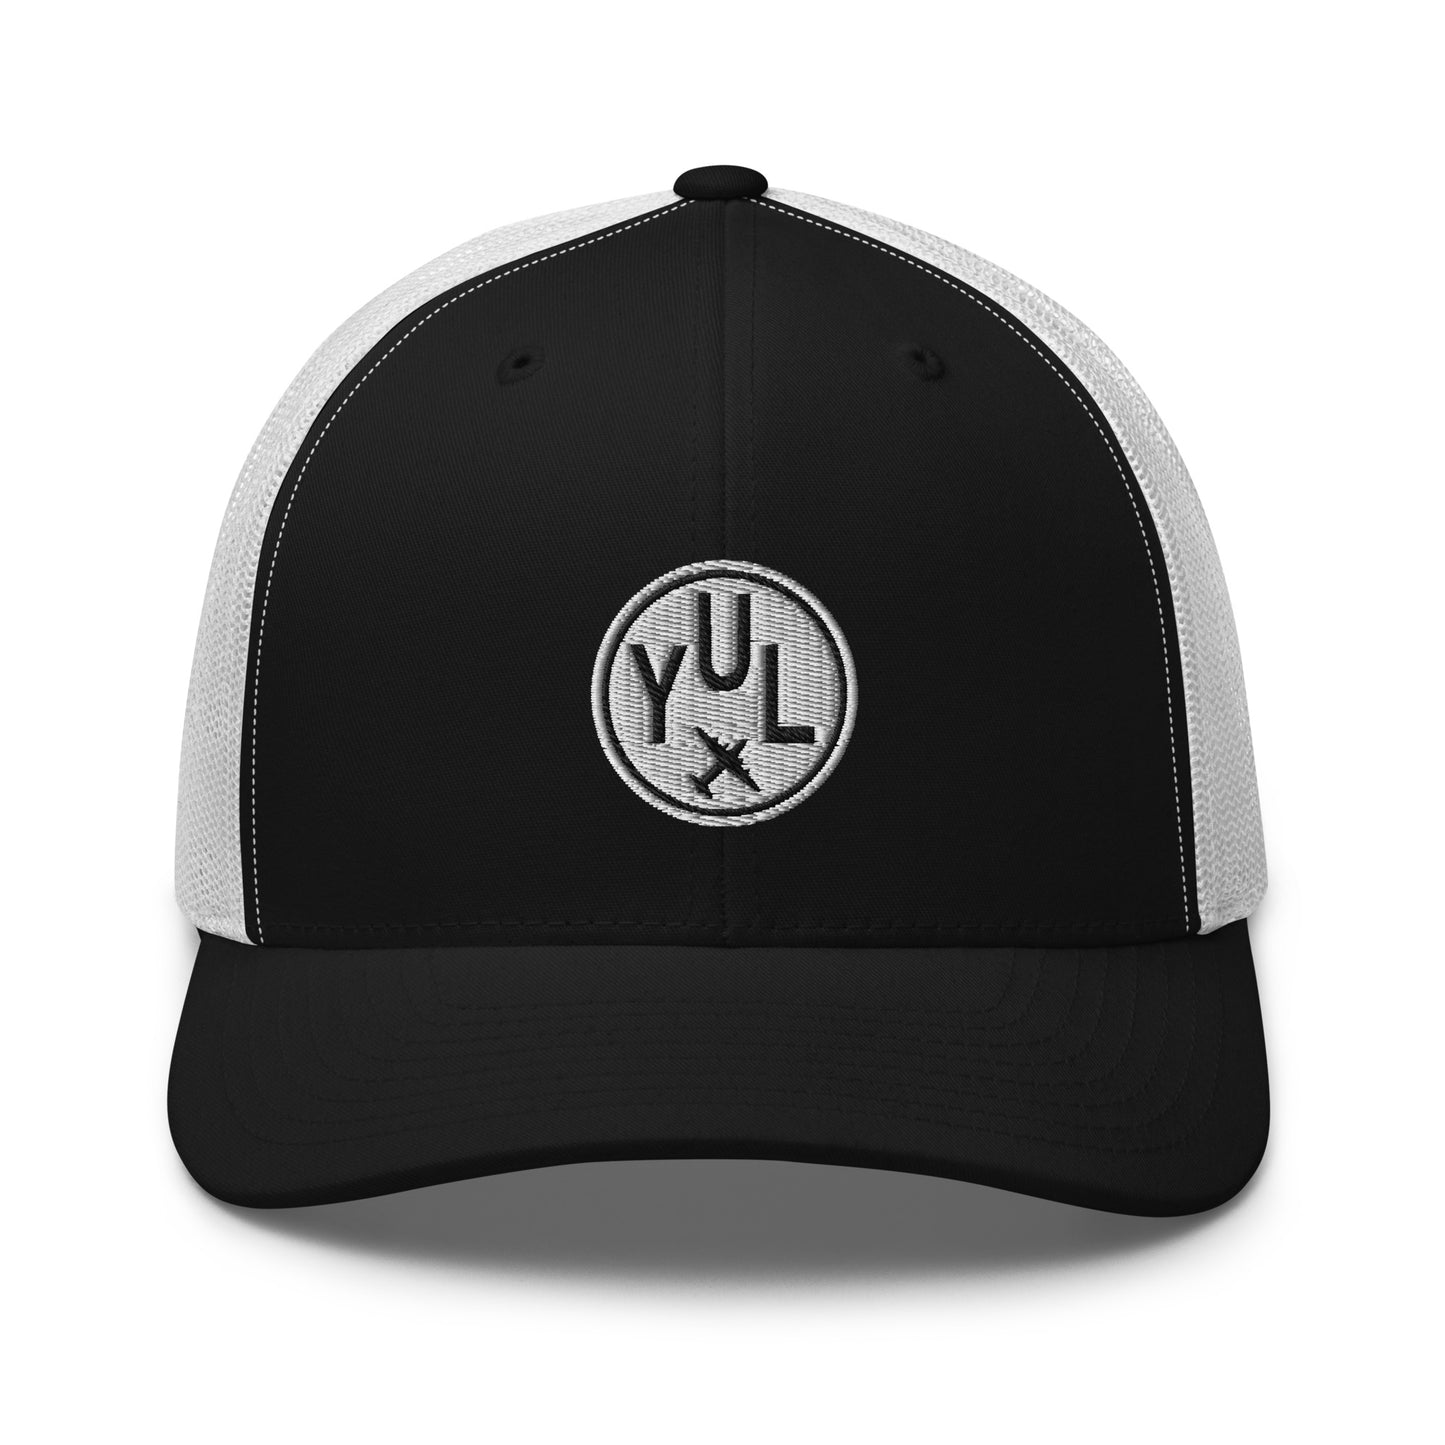 Roundel Trucker Hat - Black & White • YUL Montreal • YHM Designs - Image 09